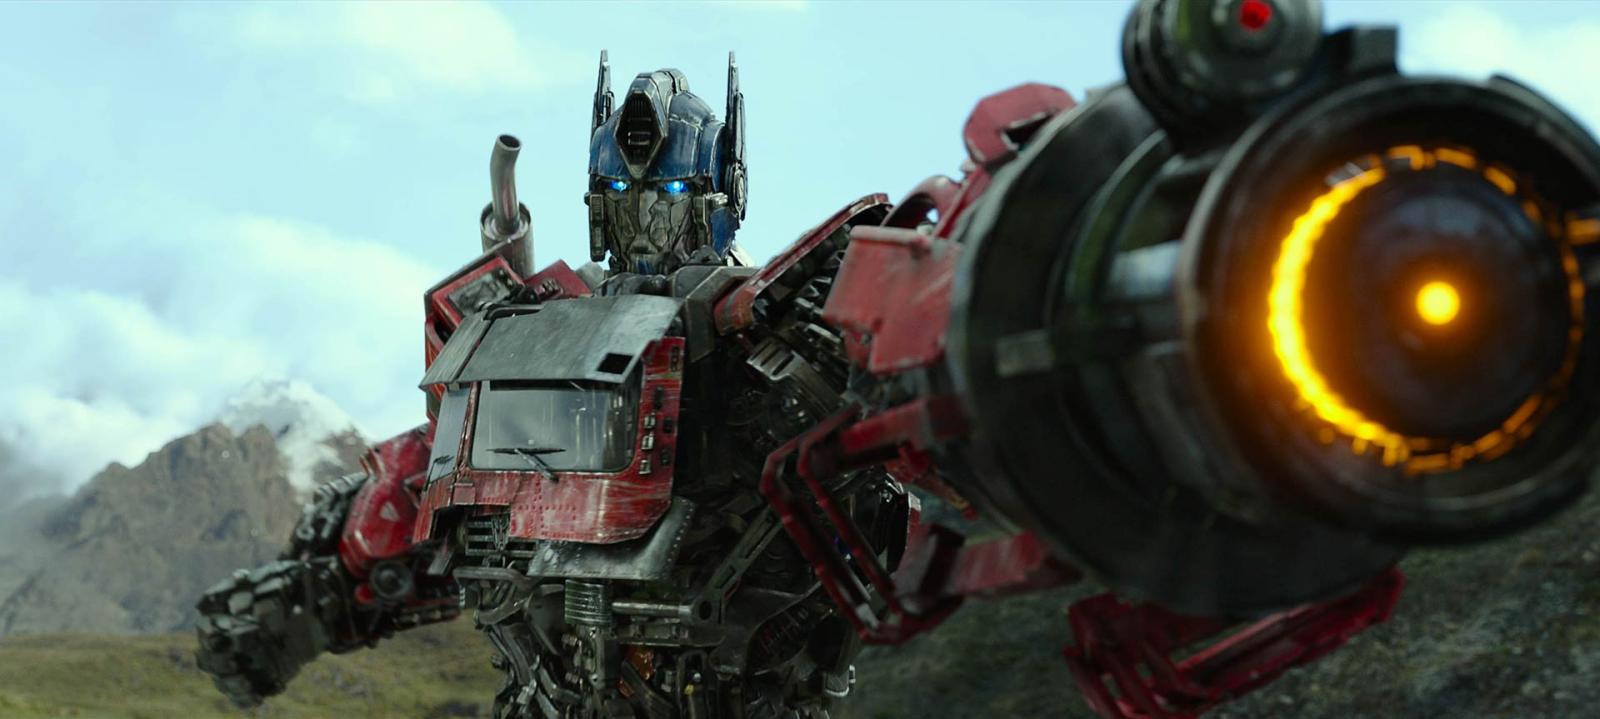 Transformers: Il Risveglio - Steelbook 4K Ultra HD + Blu-ray (Blu-ray) Image 5